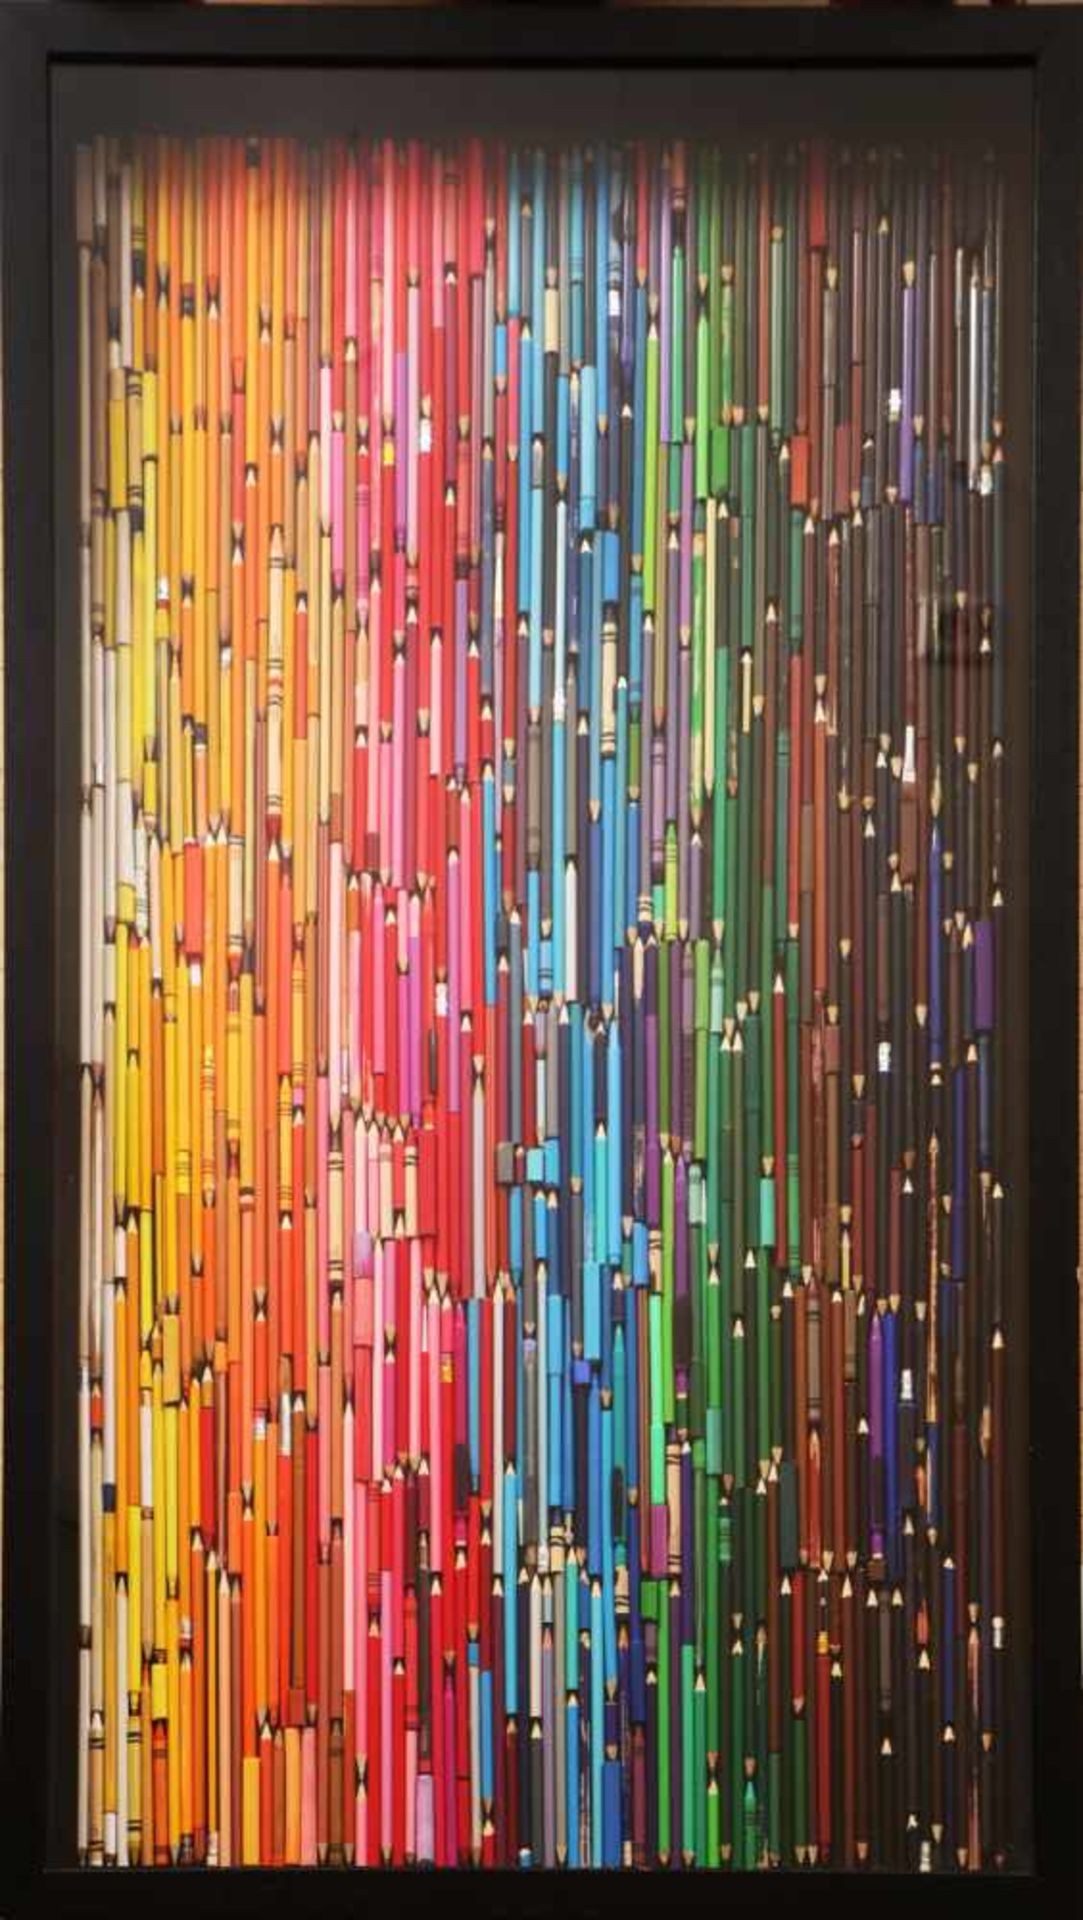 LAURENCE POOLE (Englischer Künstler) Collage, Malutensilien (¨Crayons¨) bestehend aus Pinseln, Filz-